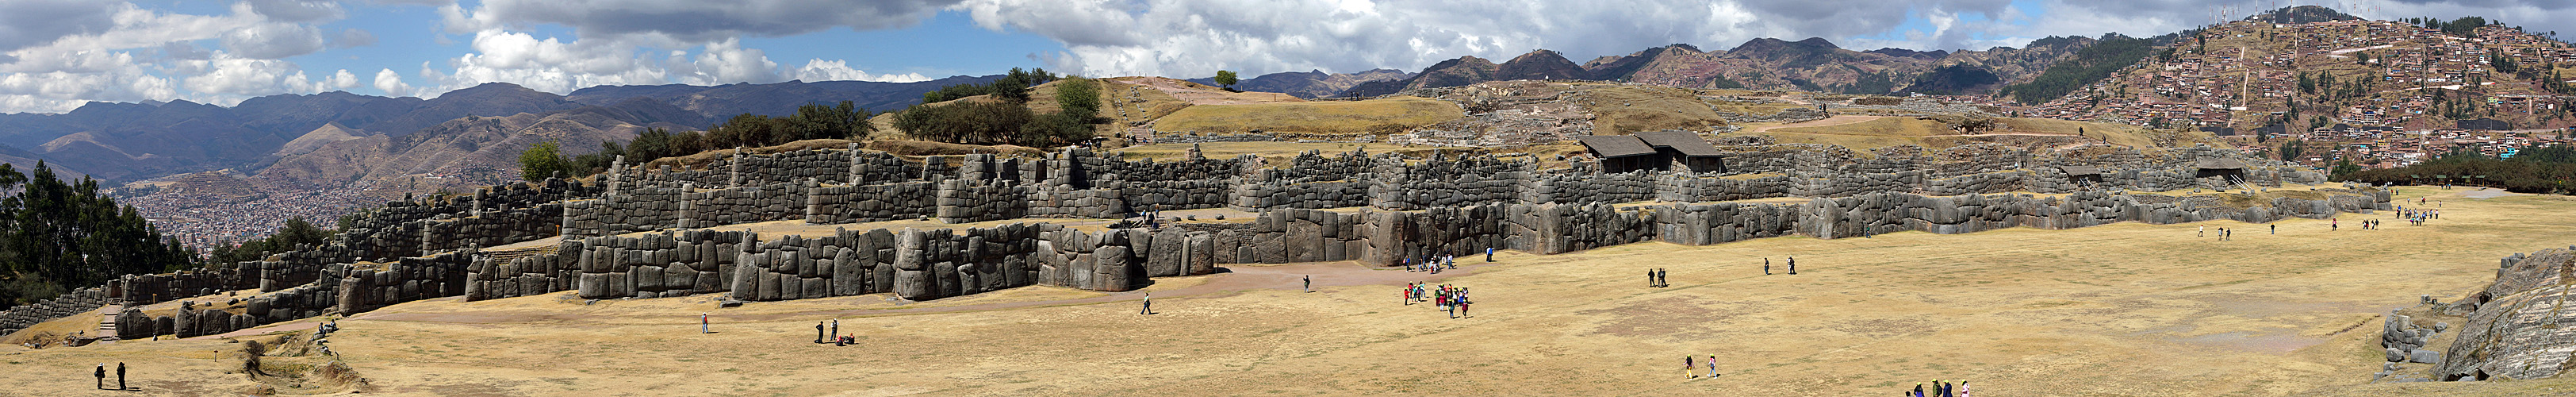 Photo panoramique de Sacsayhuamán (forteresse Inca)